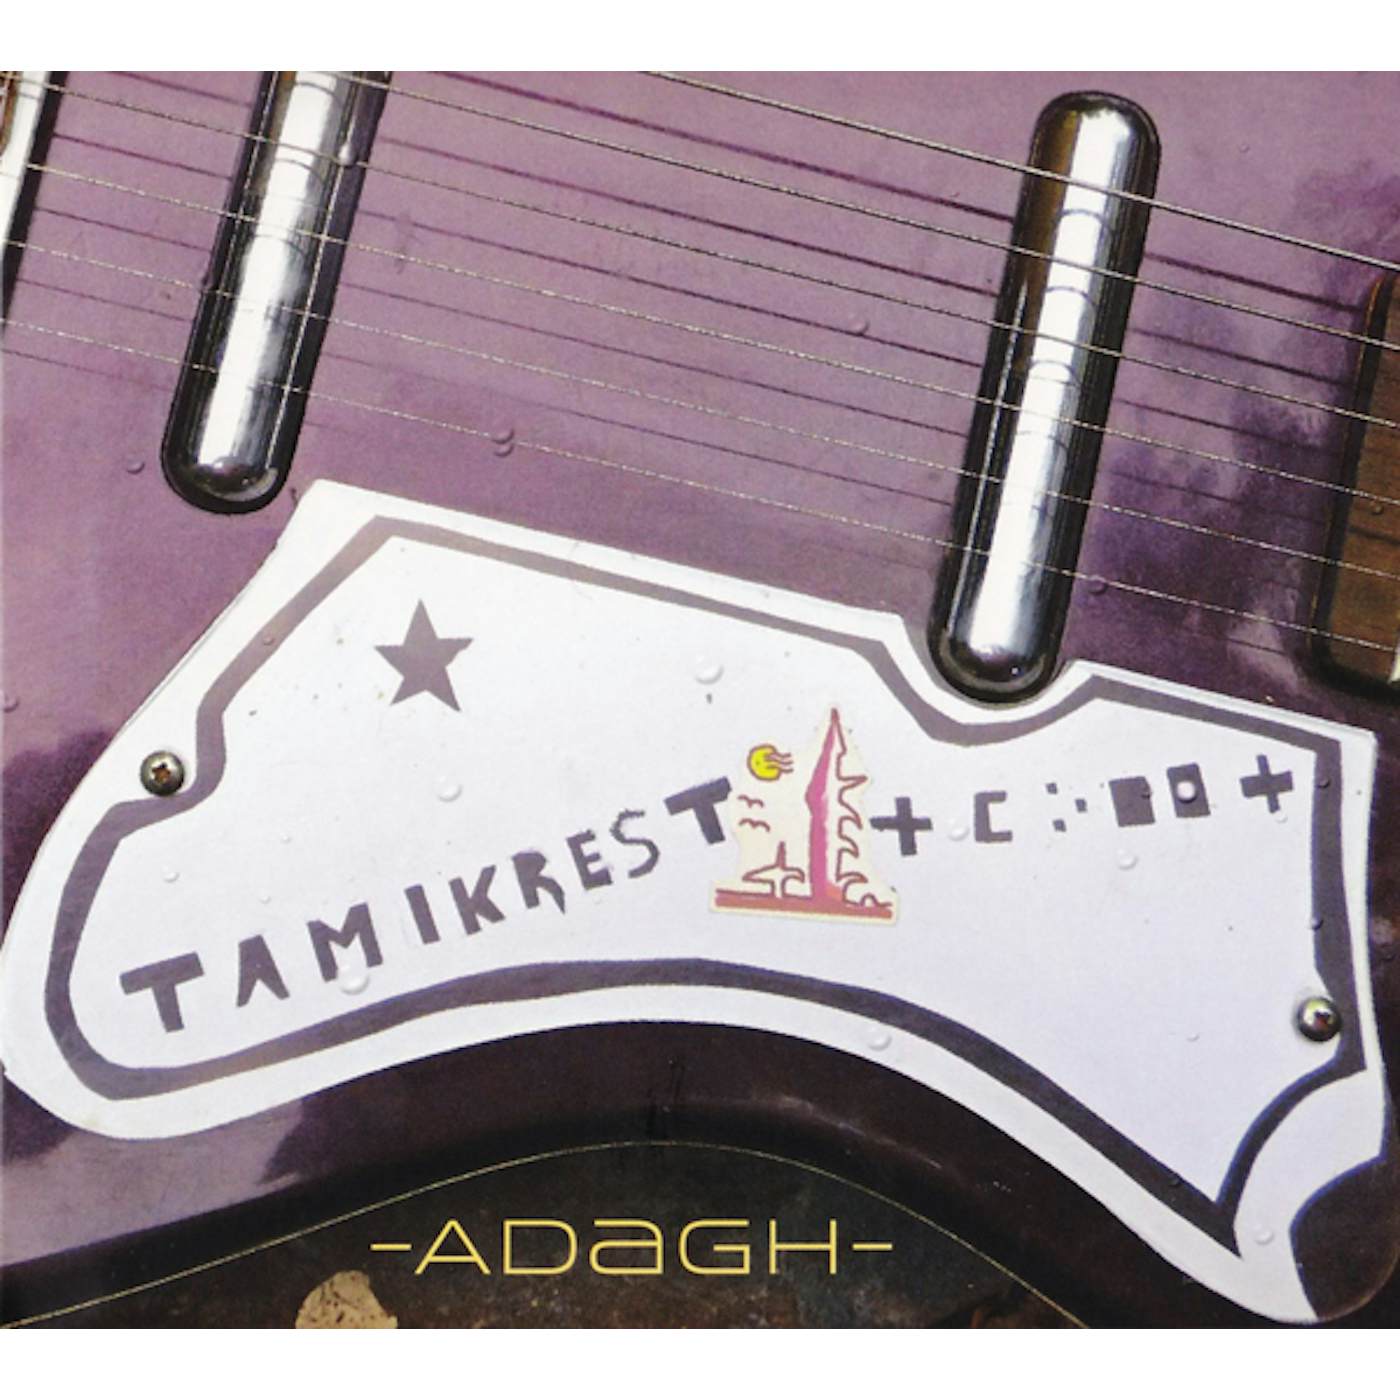 Tamikrest Adagh Vinyl Record